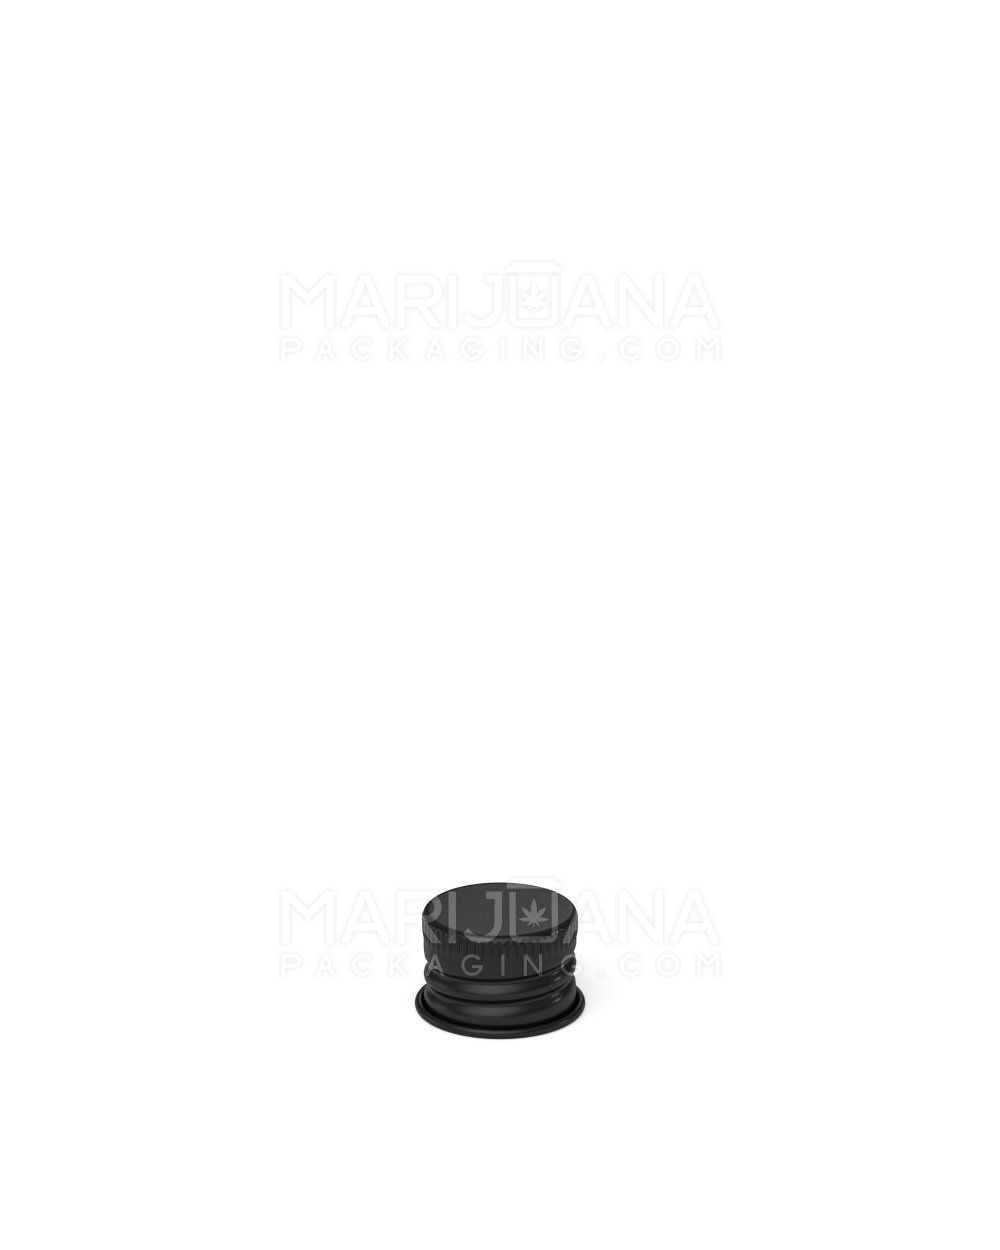 Ribbed Screw Top Metal Caps w/ Foam Liner | 18mm - Glossy Black - 400 Count - 3